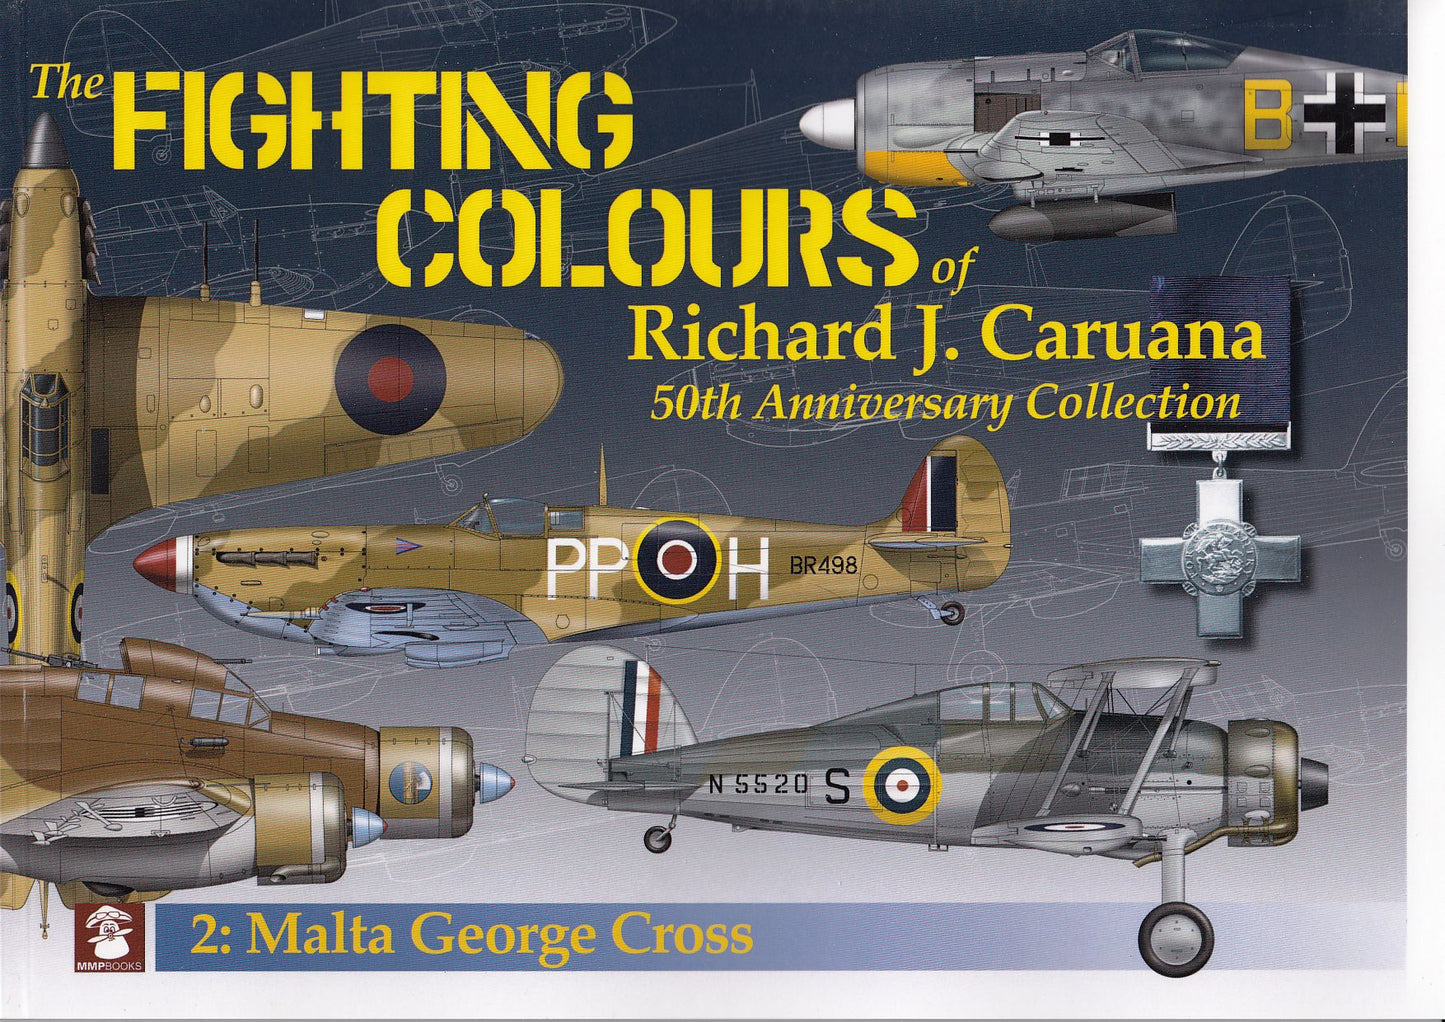 The Malta George Cross: 2 The Fighting Colours of Richard J. Caruana